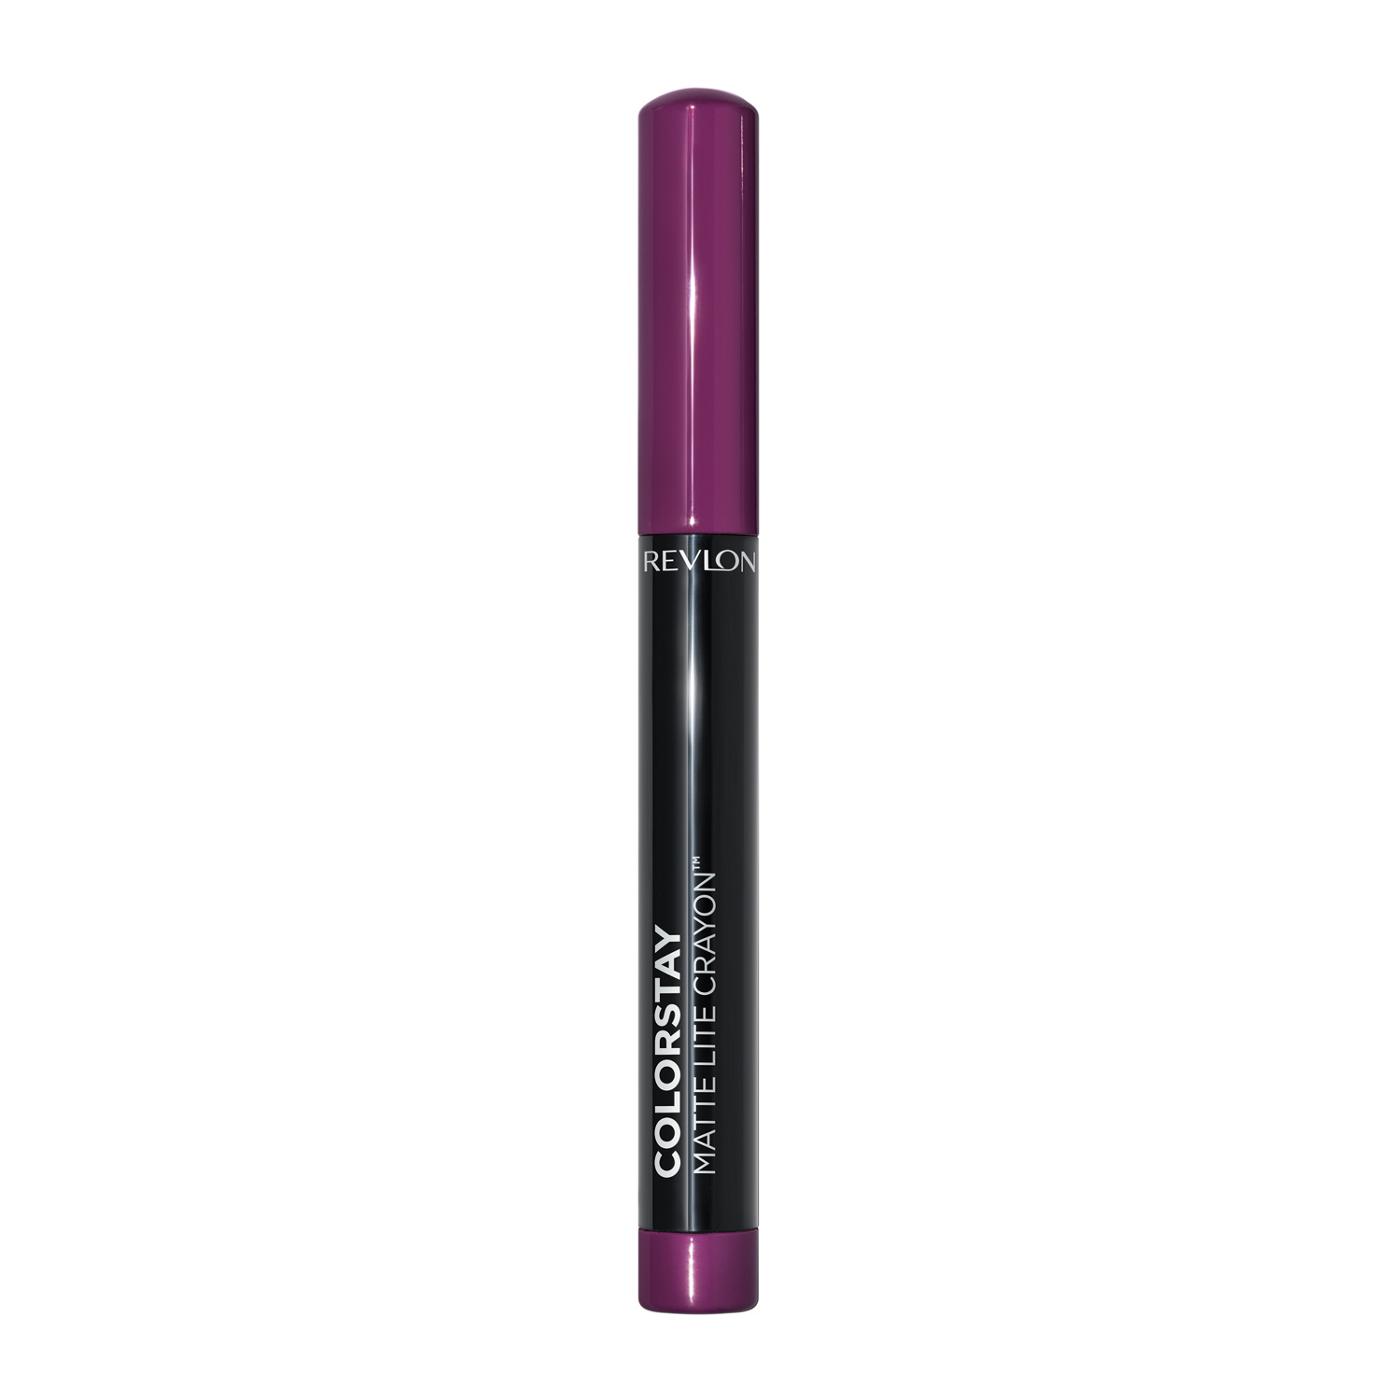 Revlon ColorStay Matte Lite Crayon Lipstick - On Cloud Wine; image 1 of 7